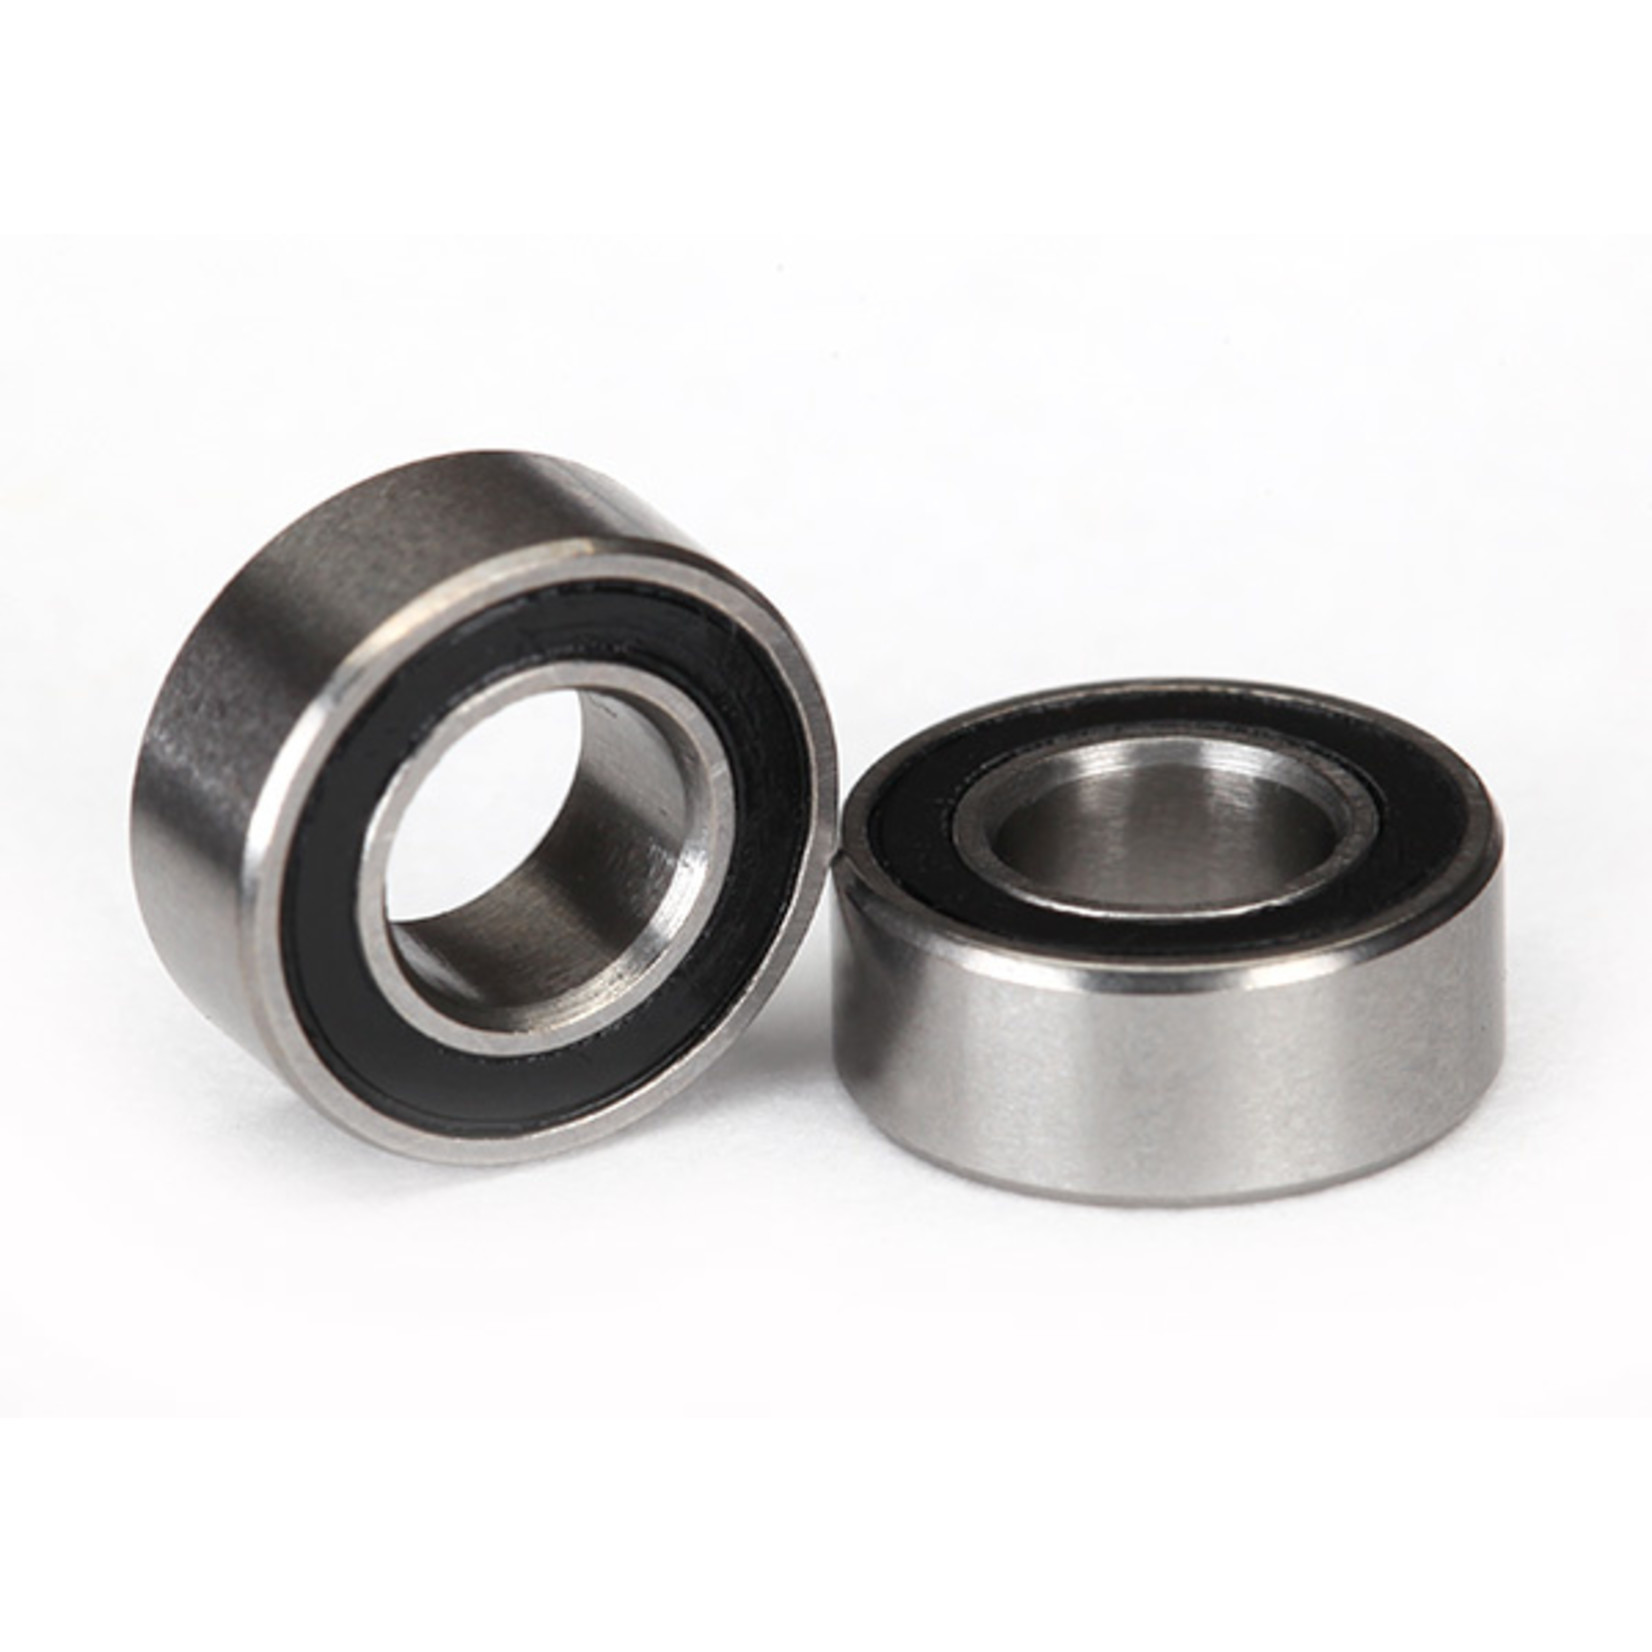 Traxxas 5115A - Ball bearings, black rubber sealed (5x10x4mm) (